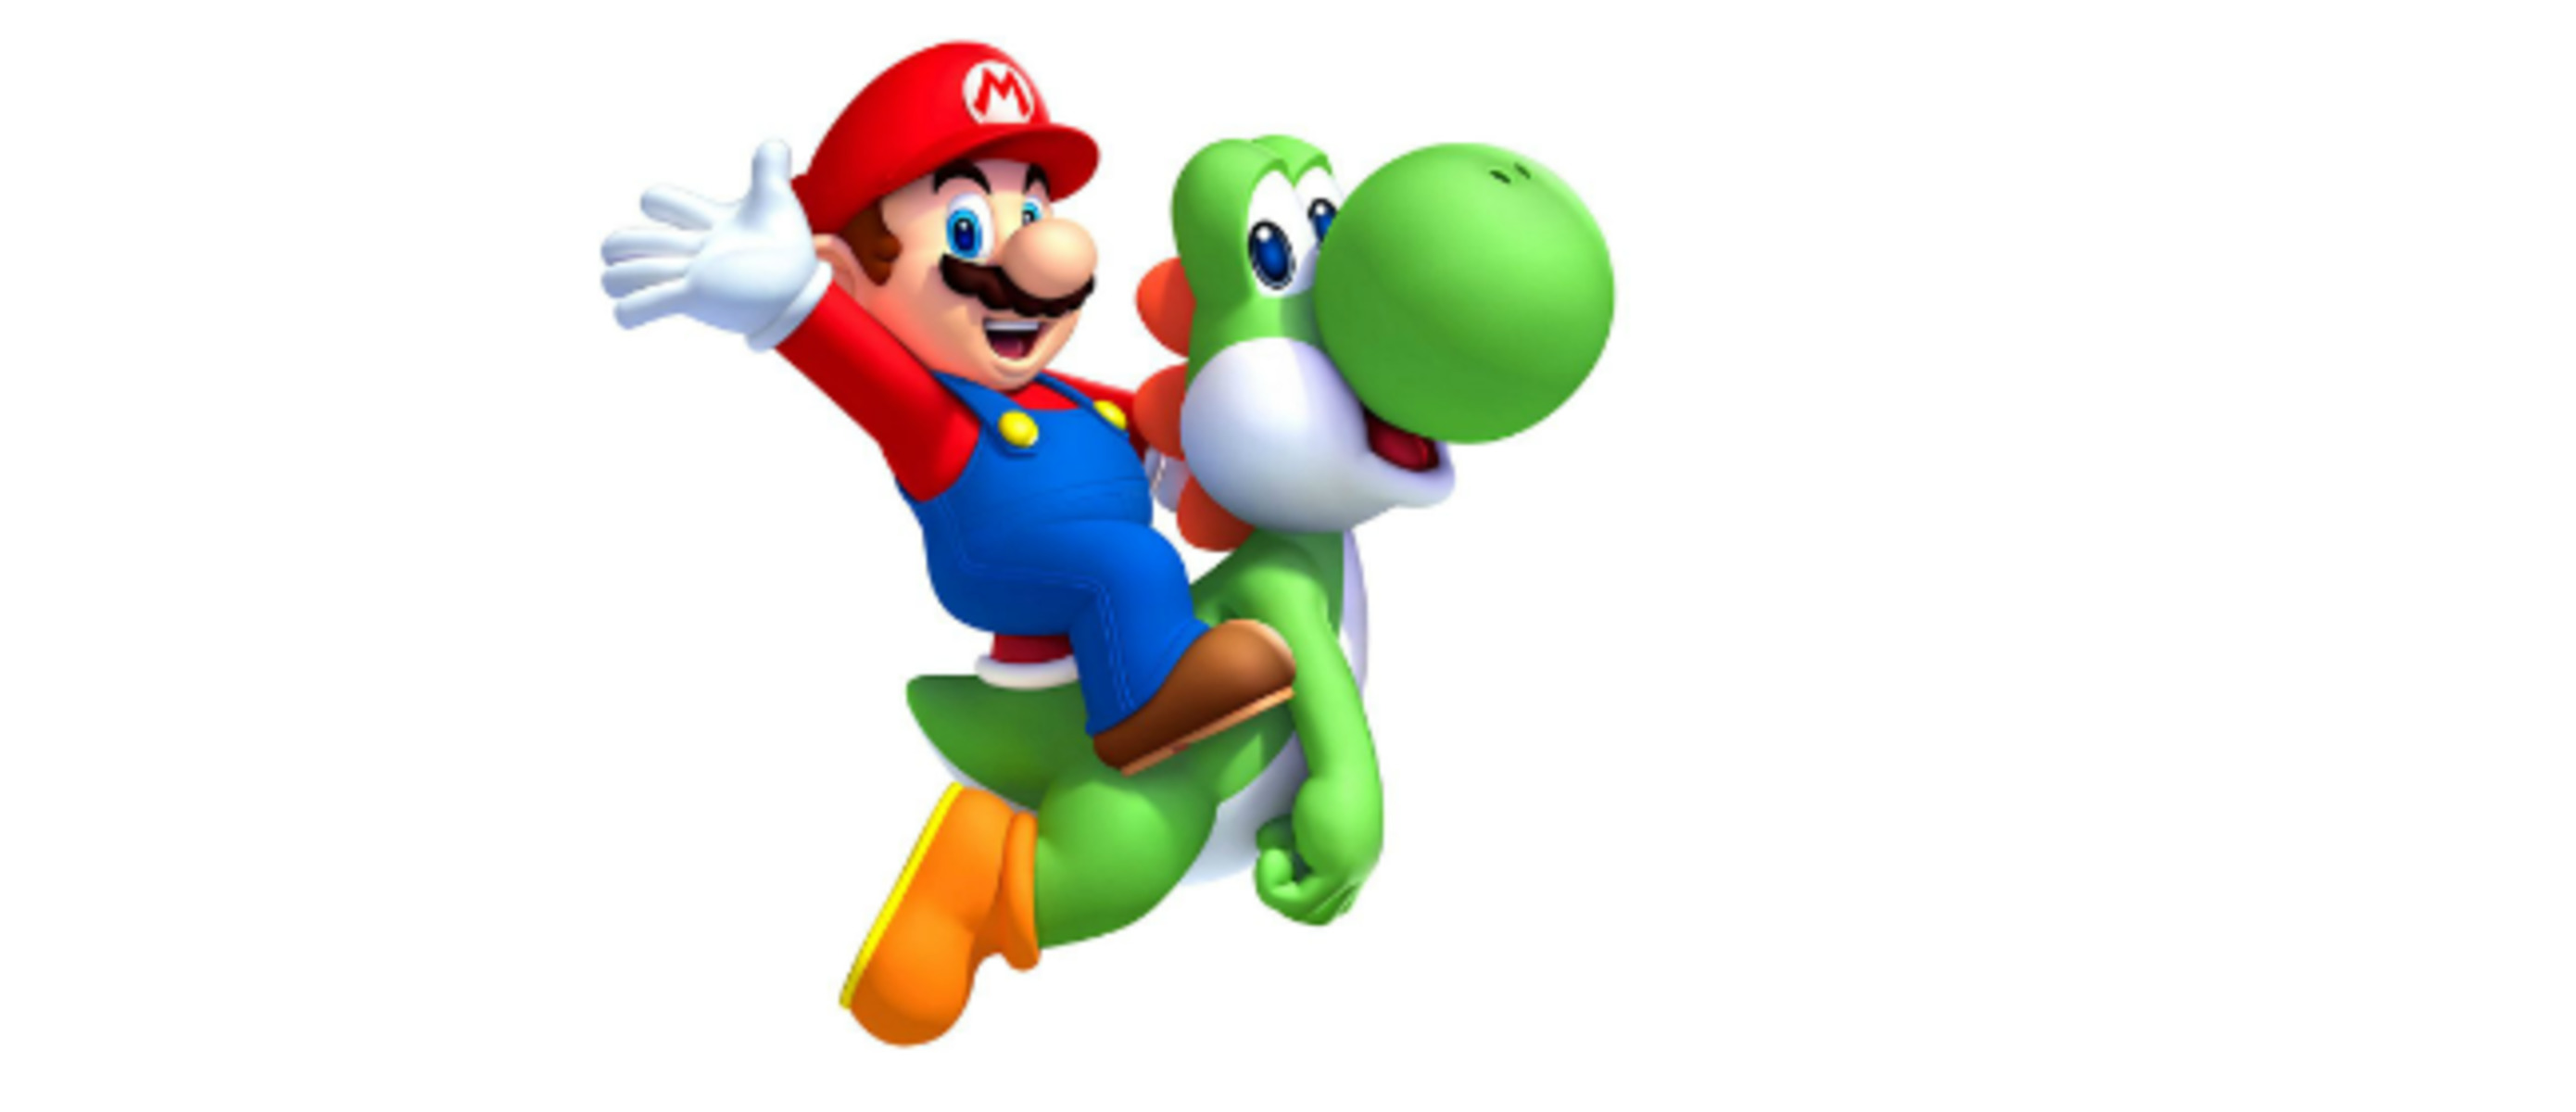 Super mario yoshi. Йоши Марио. Марио Луиджи и Йоши. Братья супер Марио Йоши. Super Mario Wii.